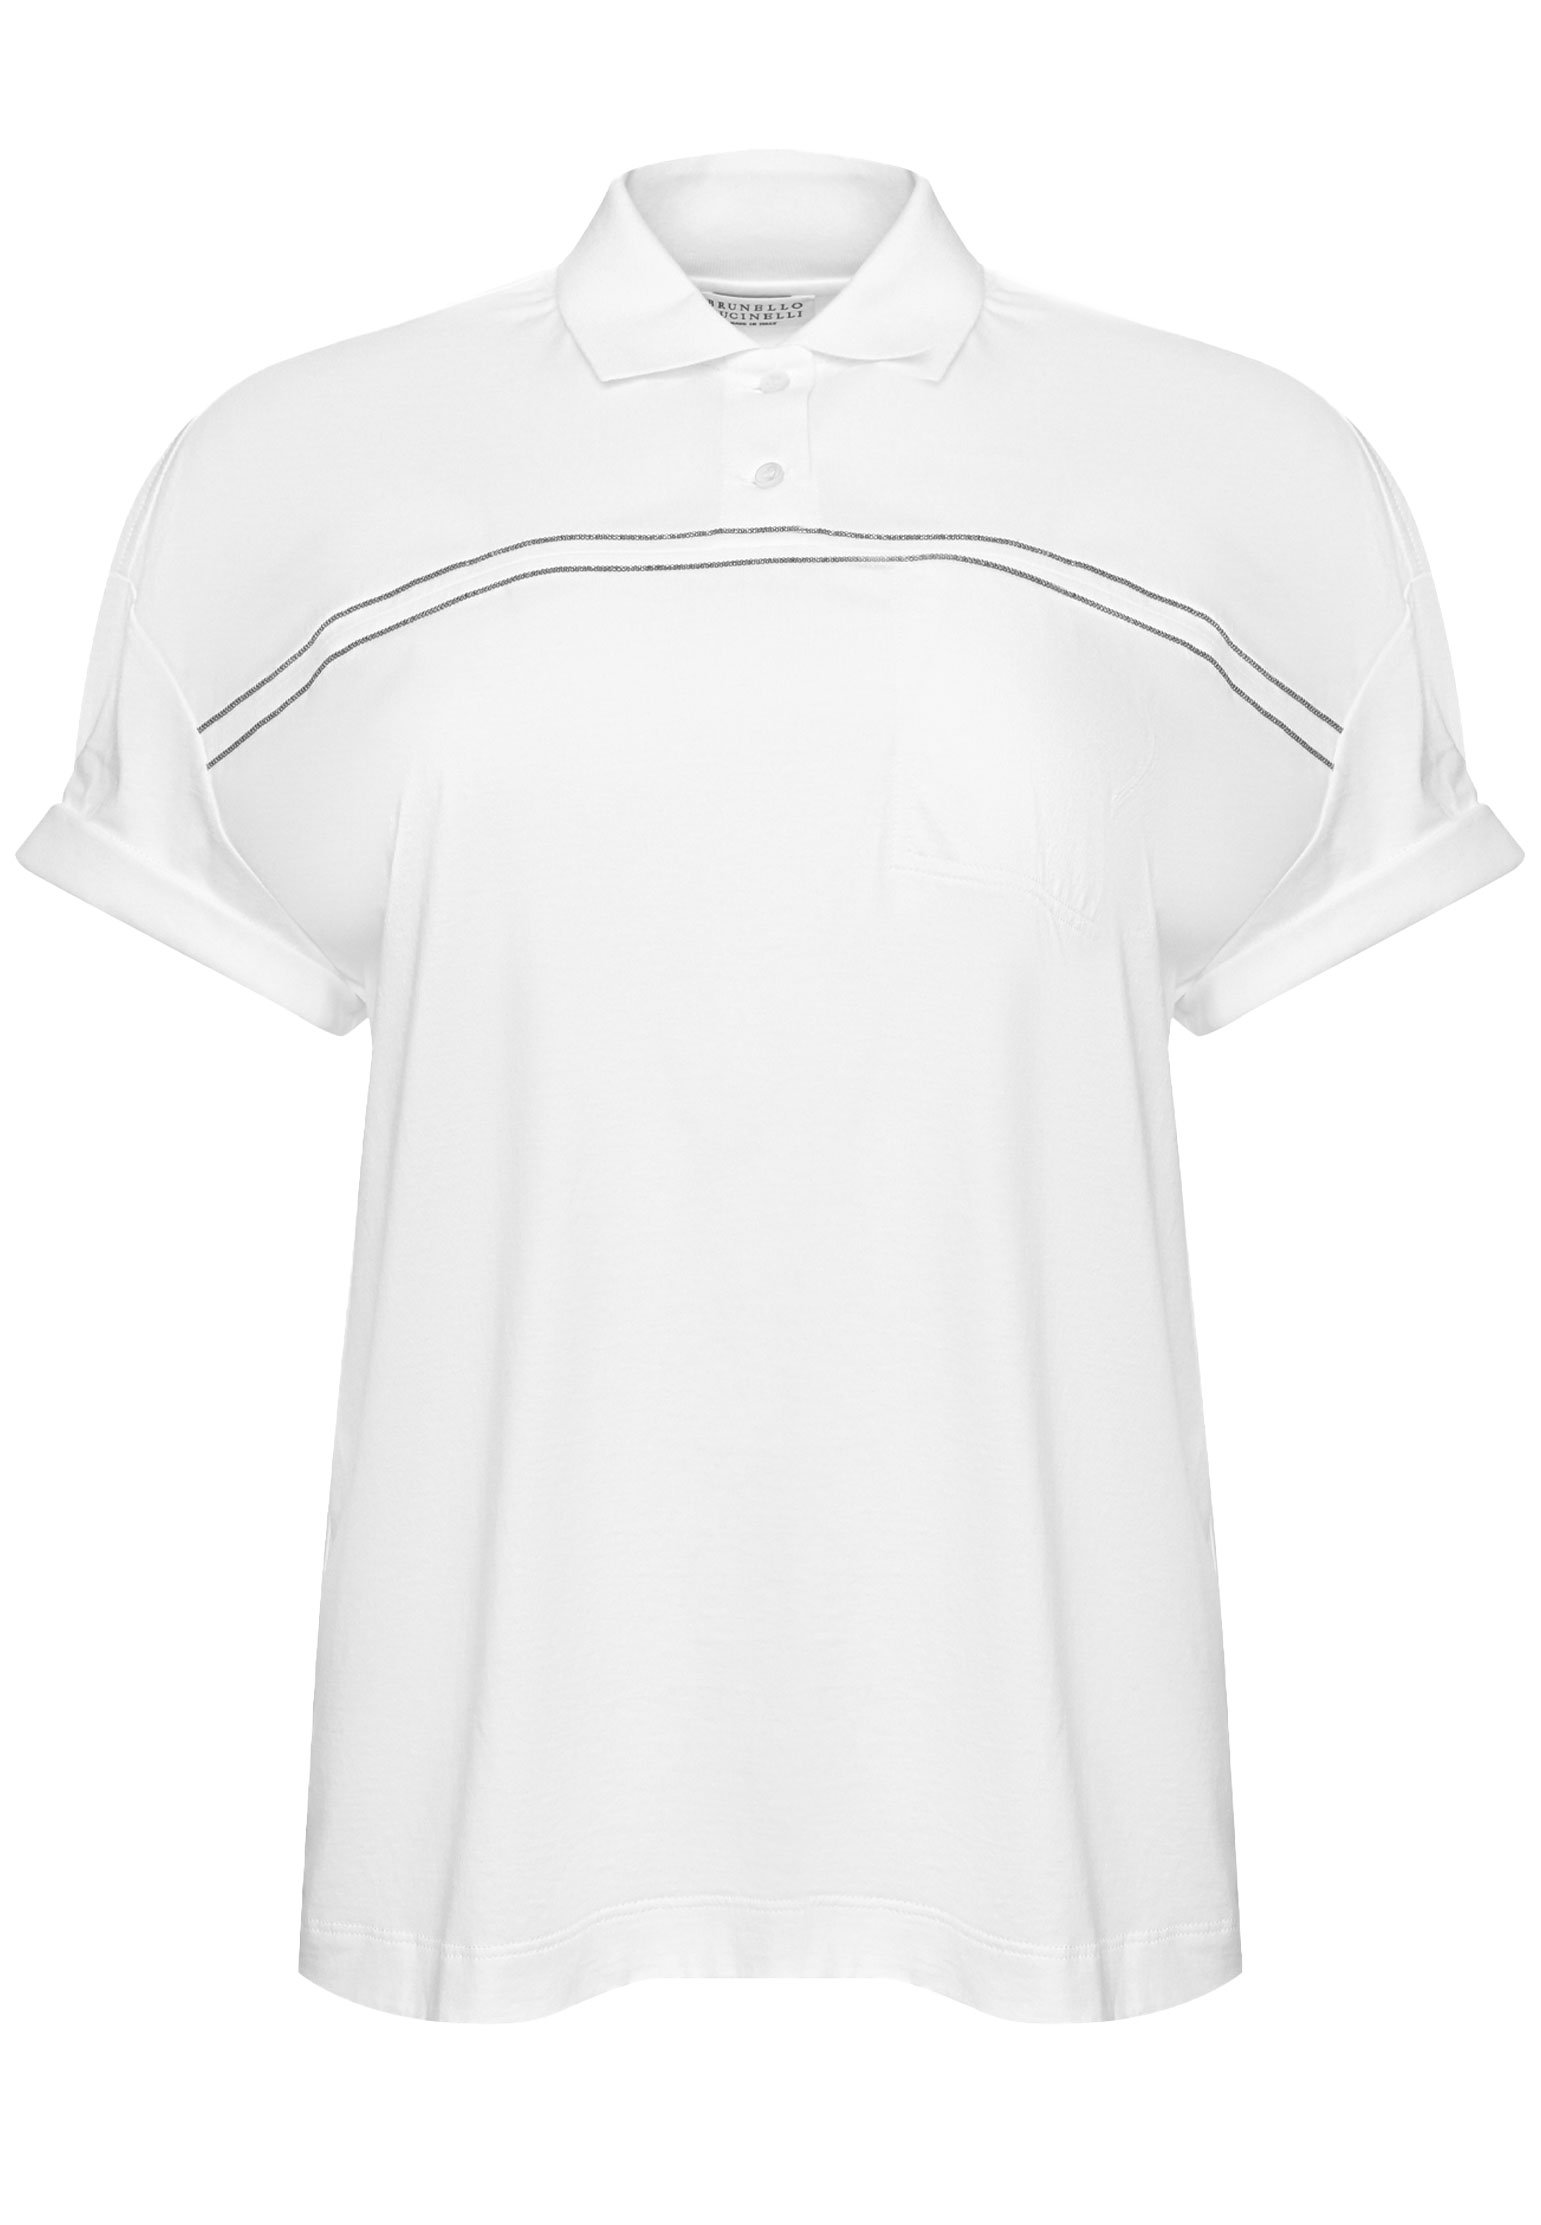 T-Shirt BRUNELLO CUCINELLI Color: white (Code: 546) in online store Allure